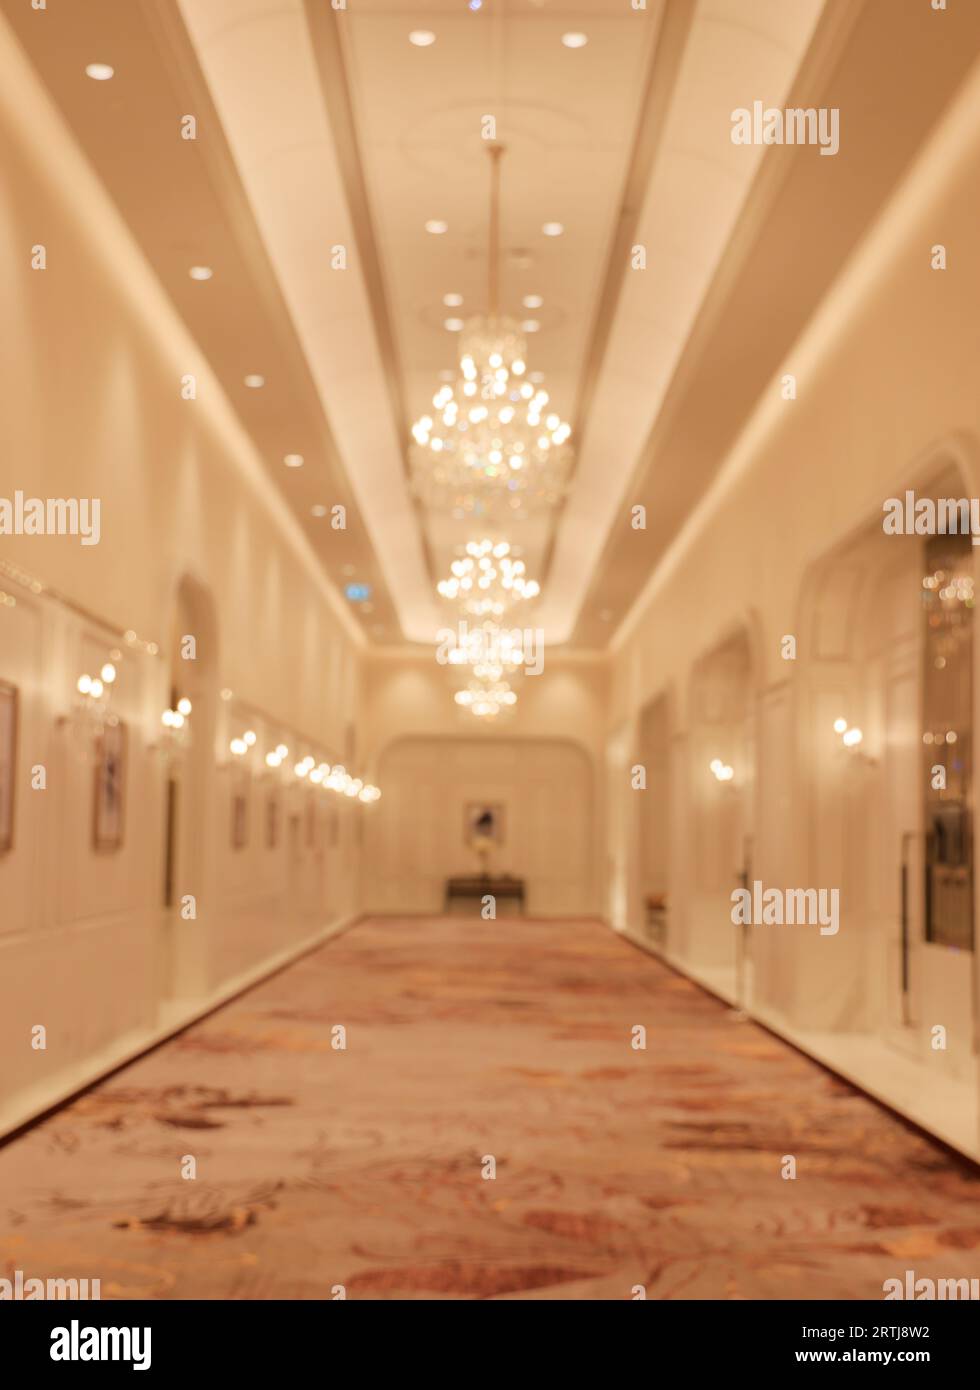 Blur, Abstract Blurred, unfocus, defocus image of modern corridor or hallway. Mystical interior of empty corridor. Stock Photo